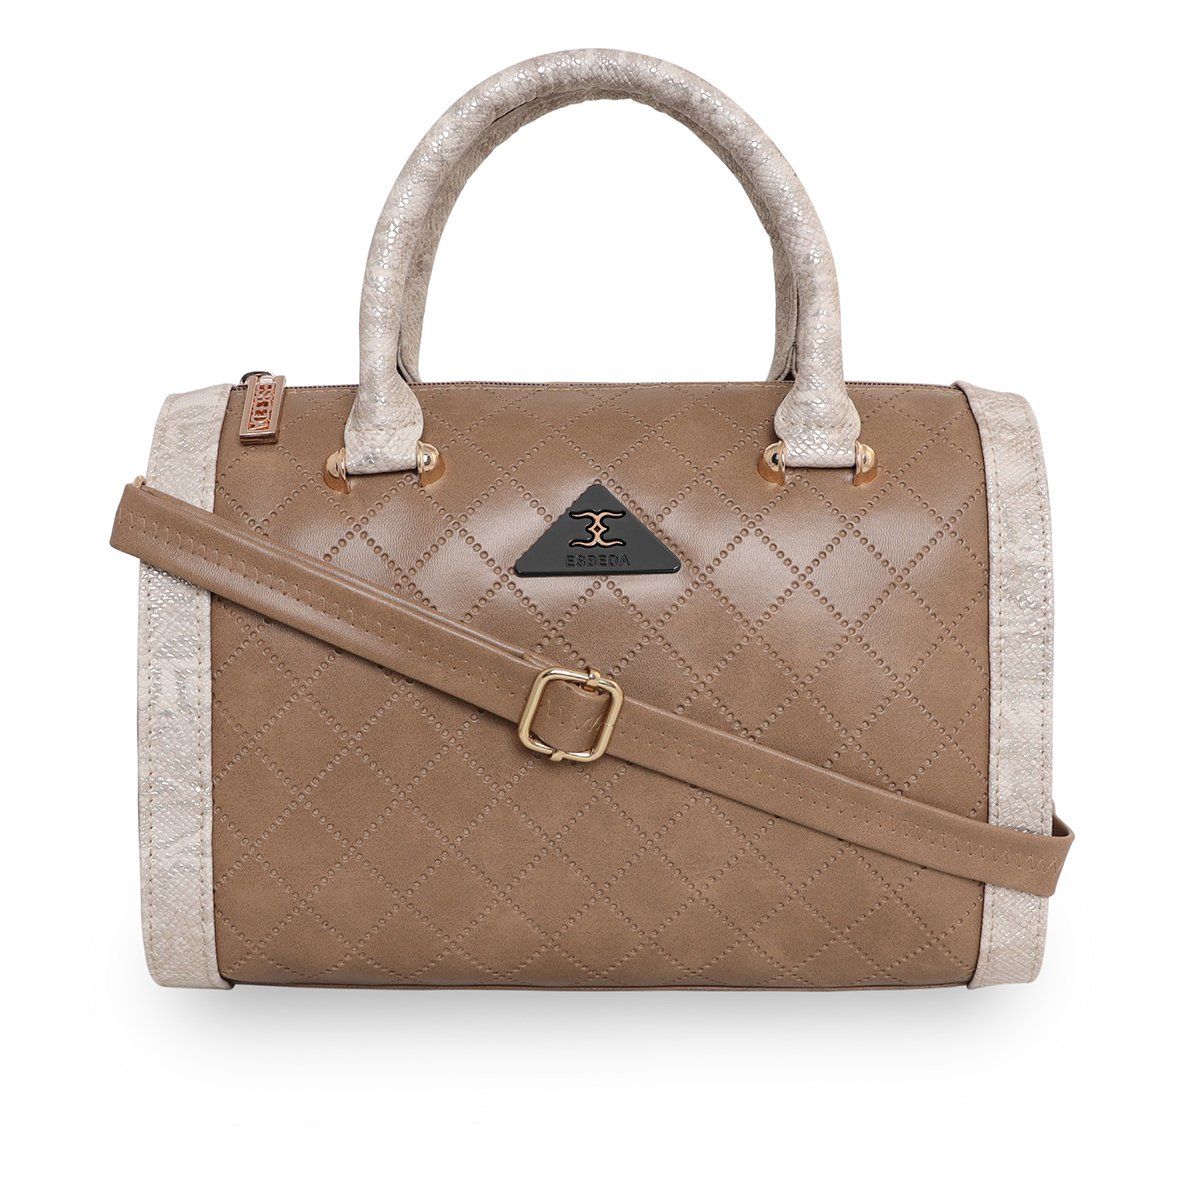 Handbags | Esbeda Bag | Freeup